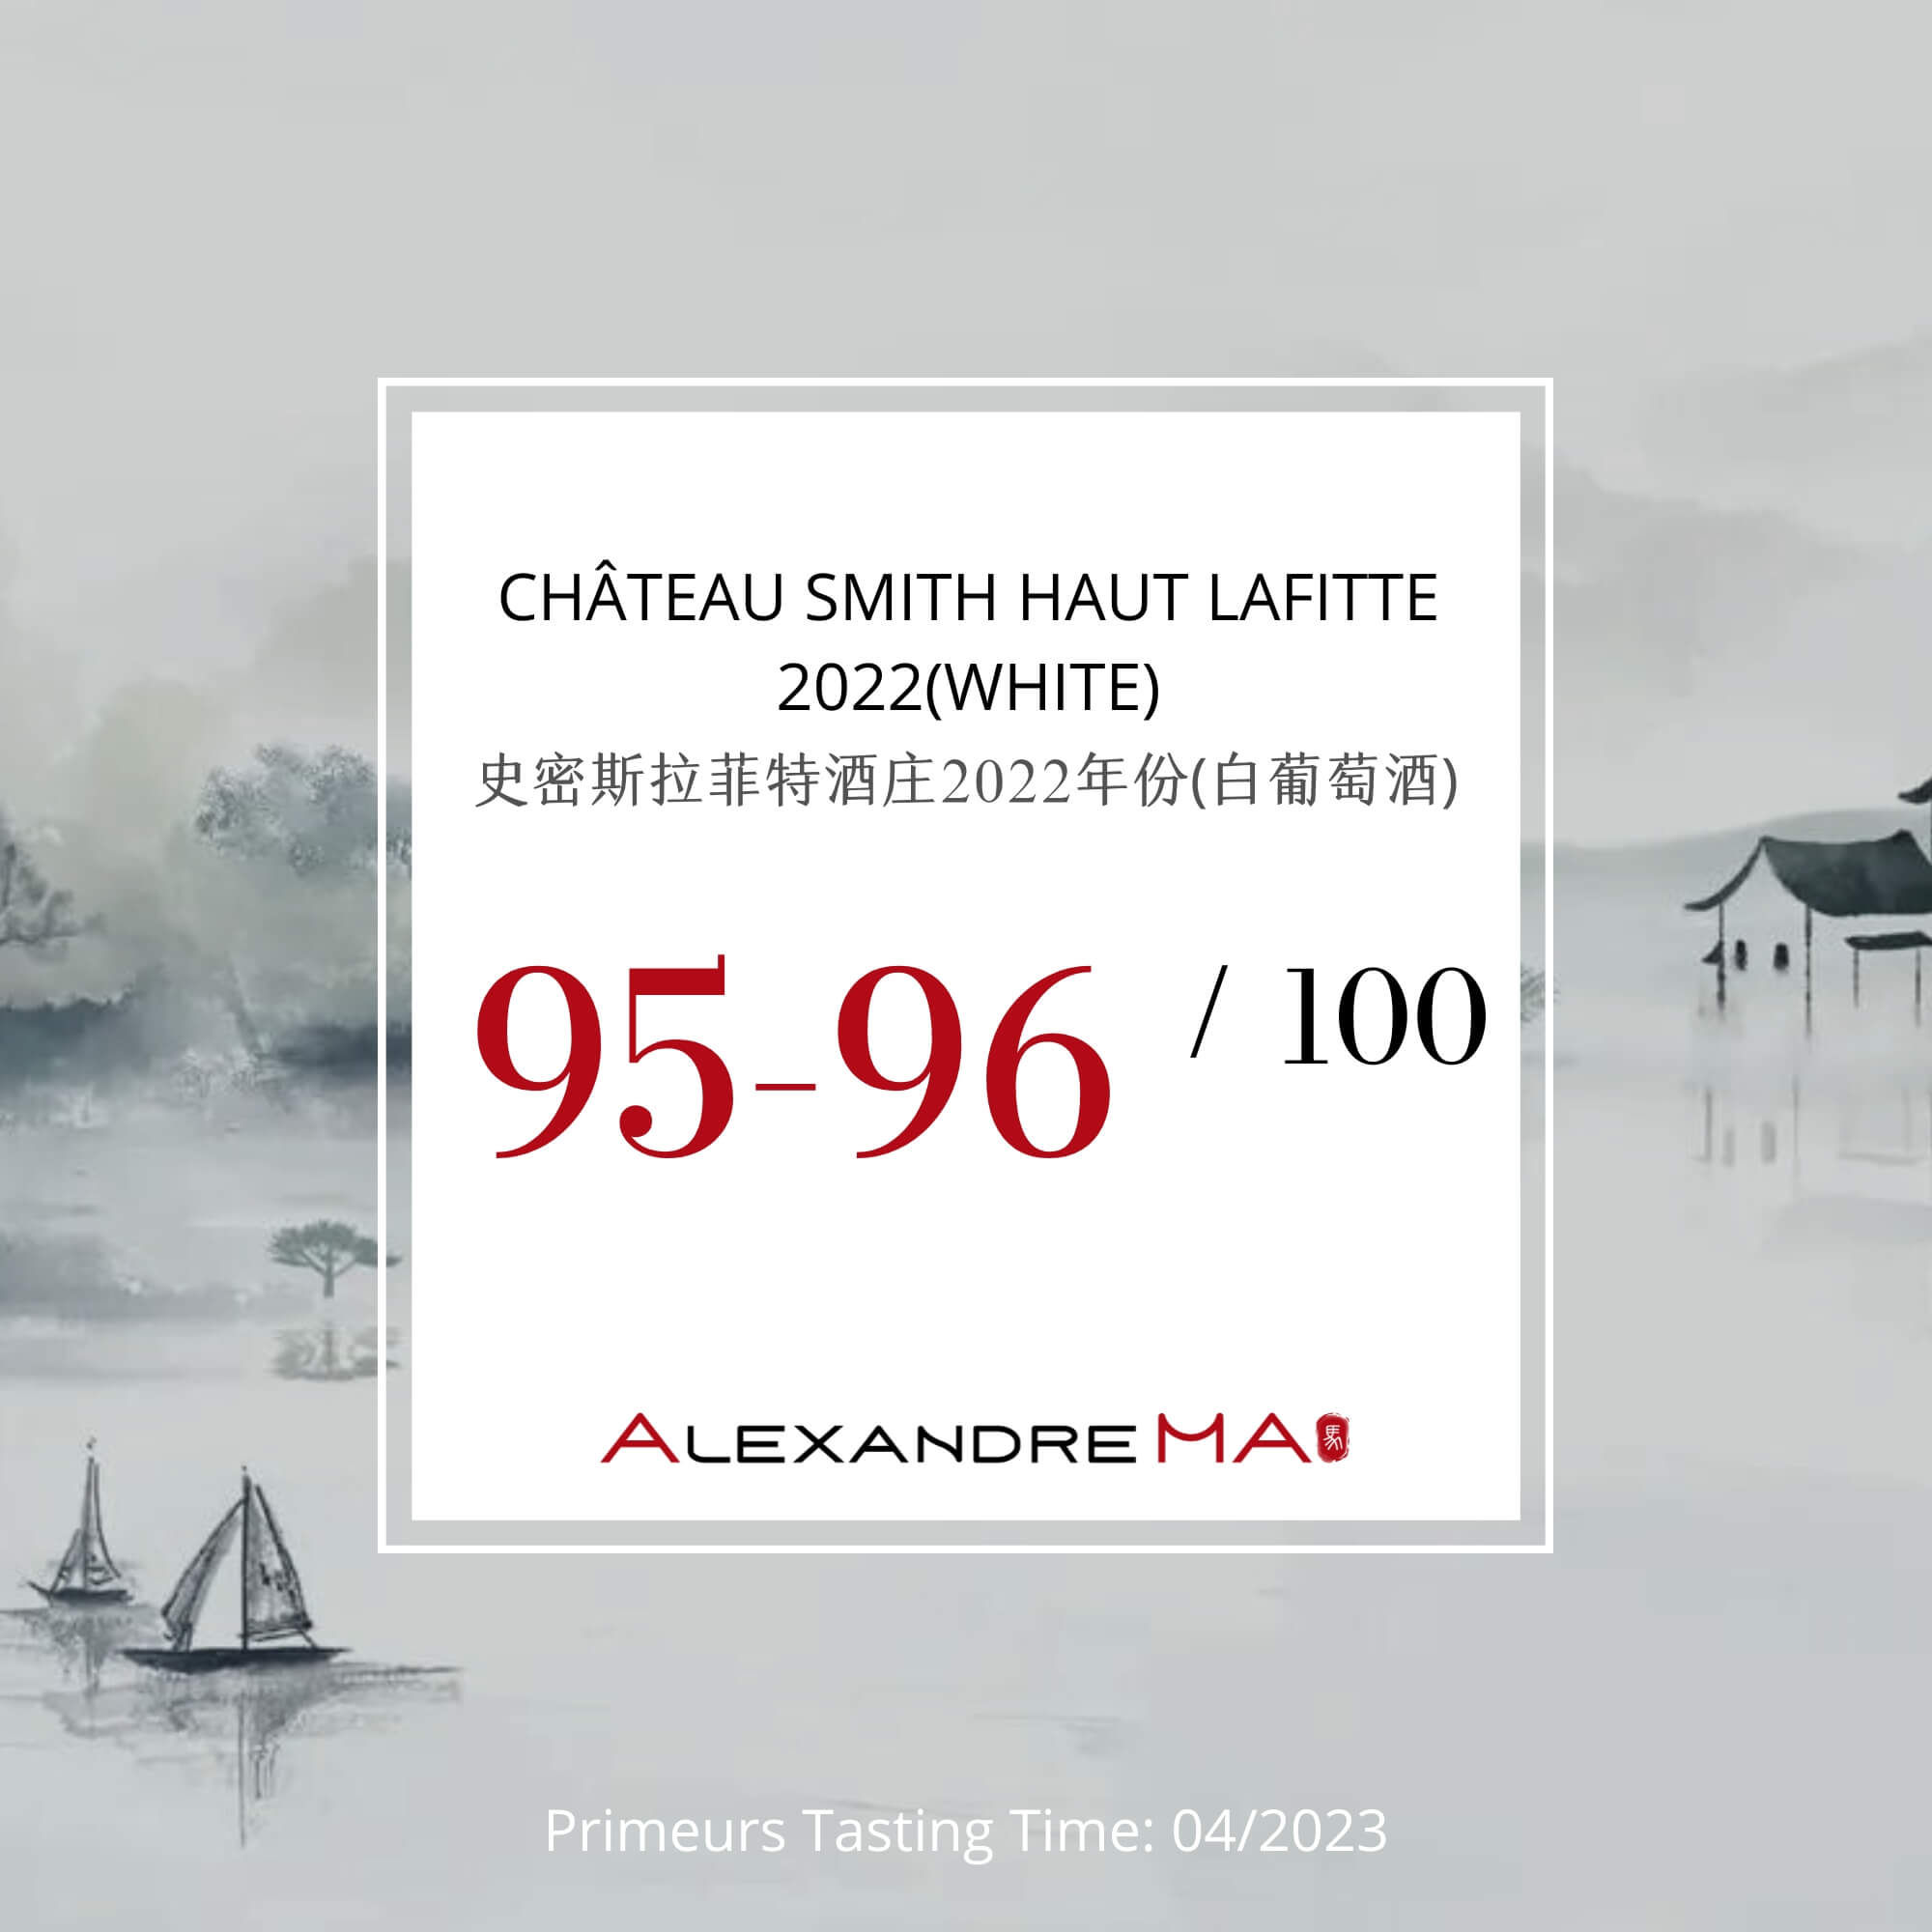 Château Smith Haut Lafitte 2022-White Primeurs - Alexandre MA